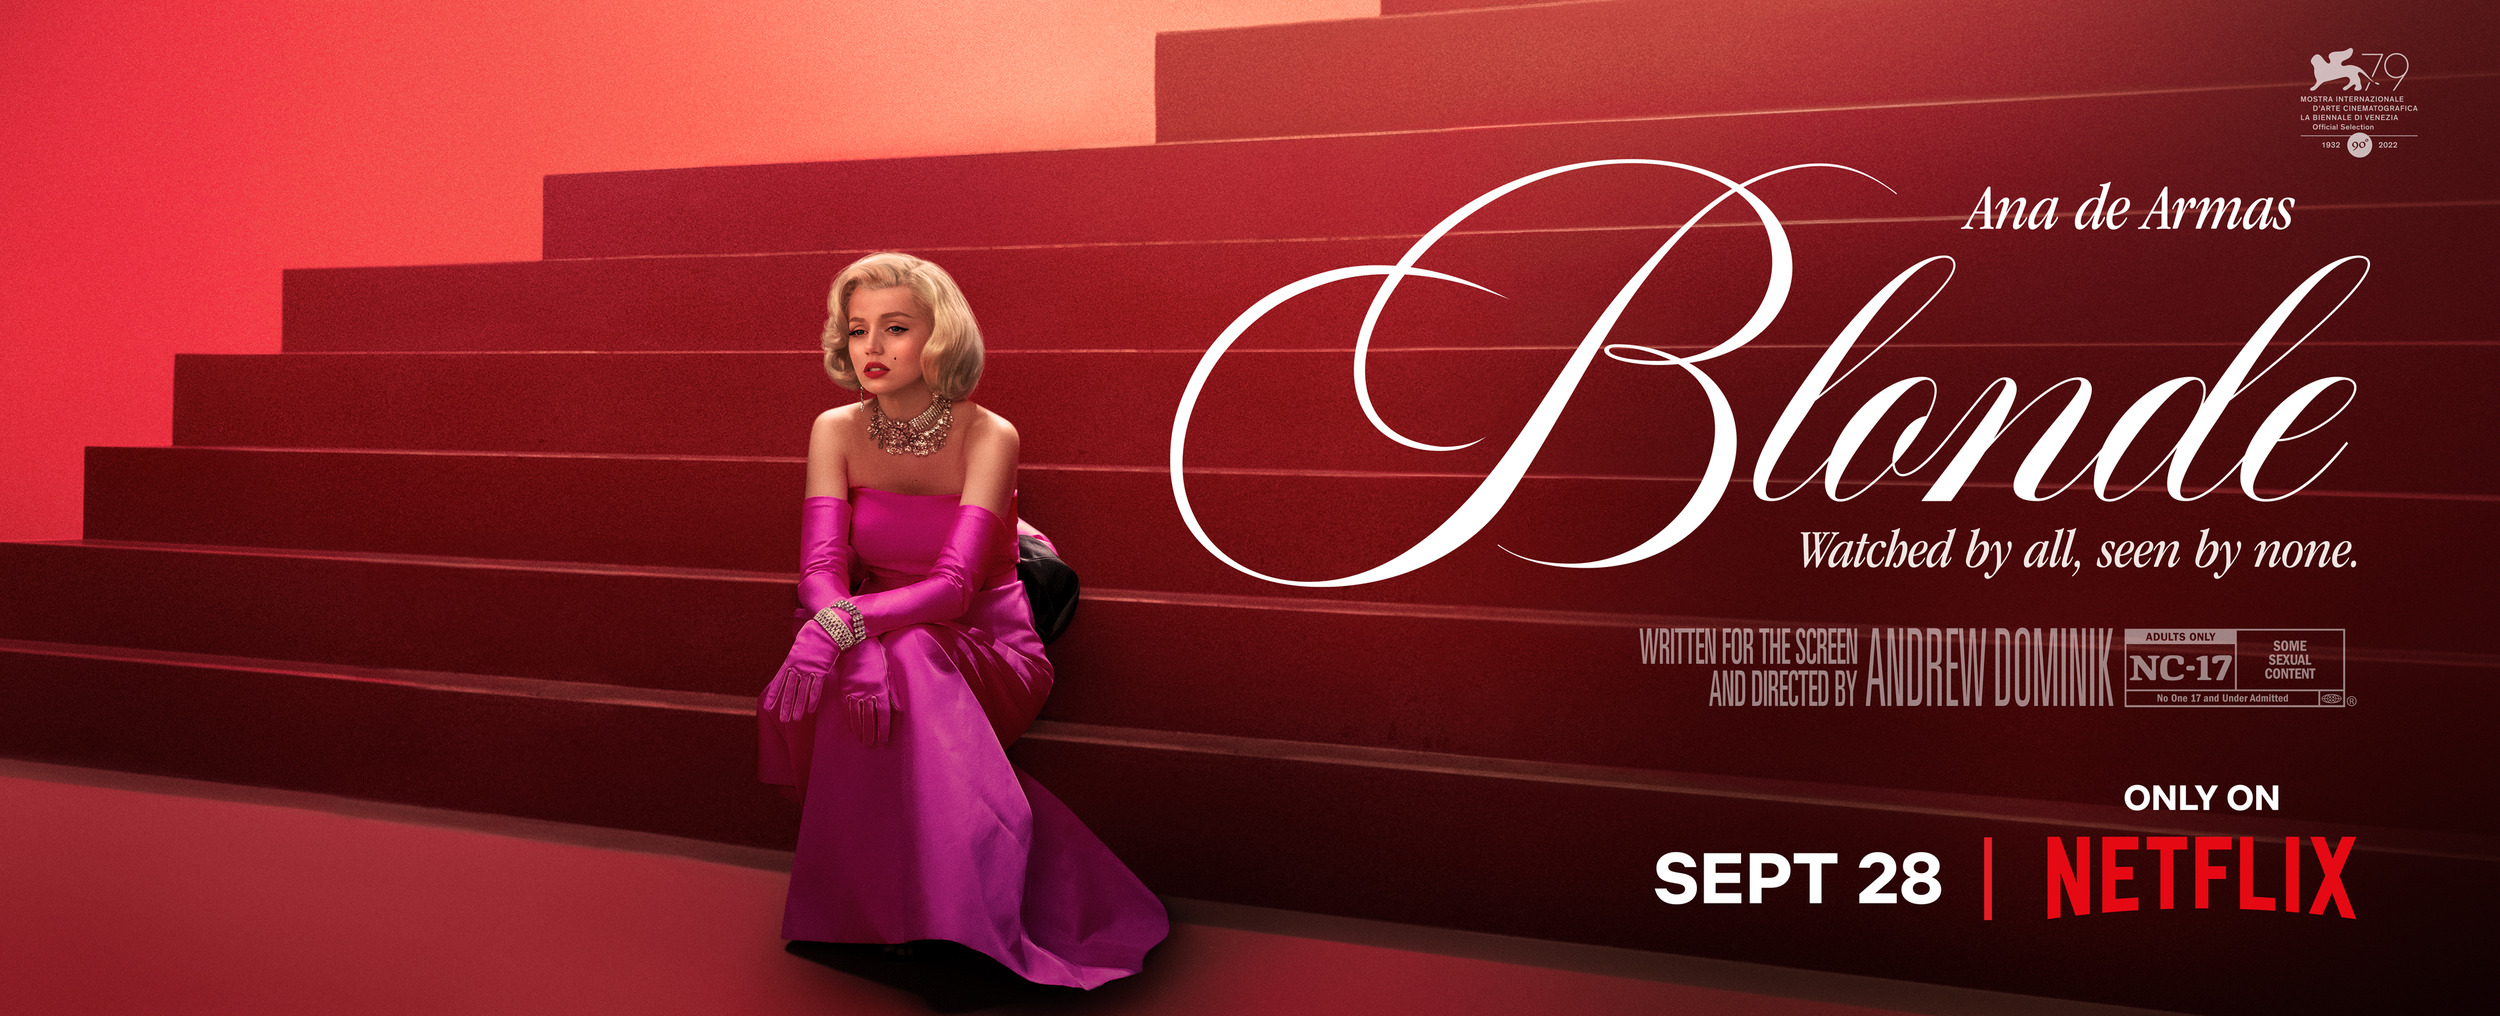 Mega Sized Movie Poster Image for Blonde (#4 of 4)